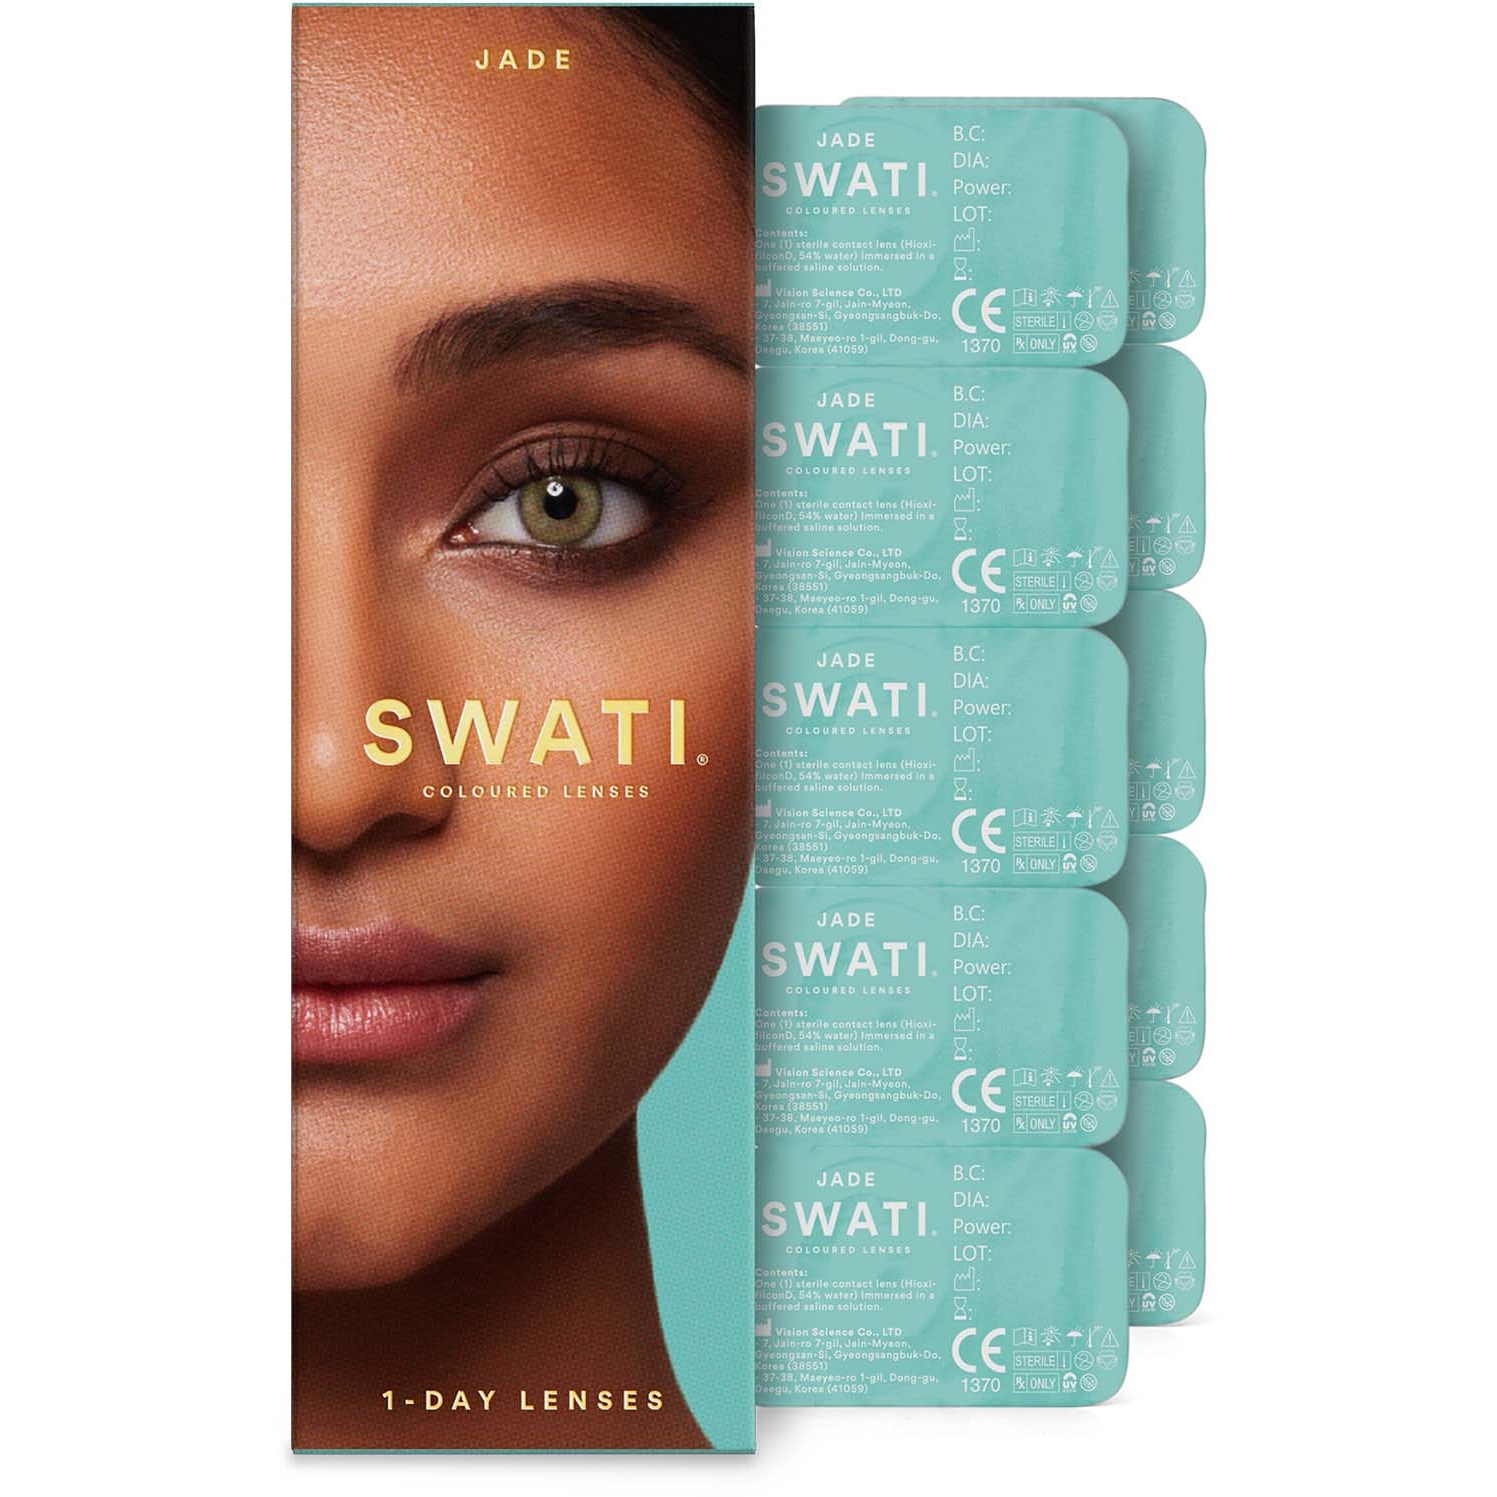 SWATI Cosmetics 1-Day Lenses Jade